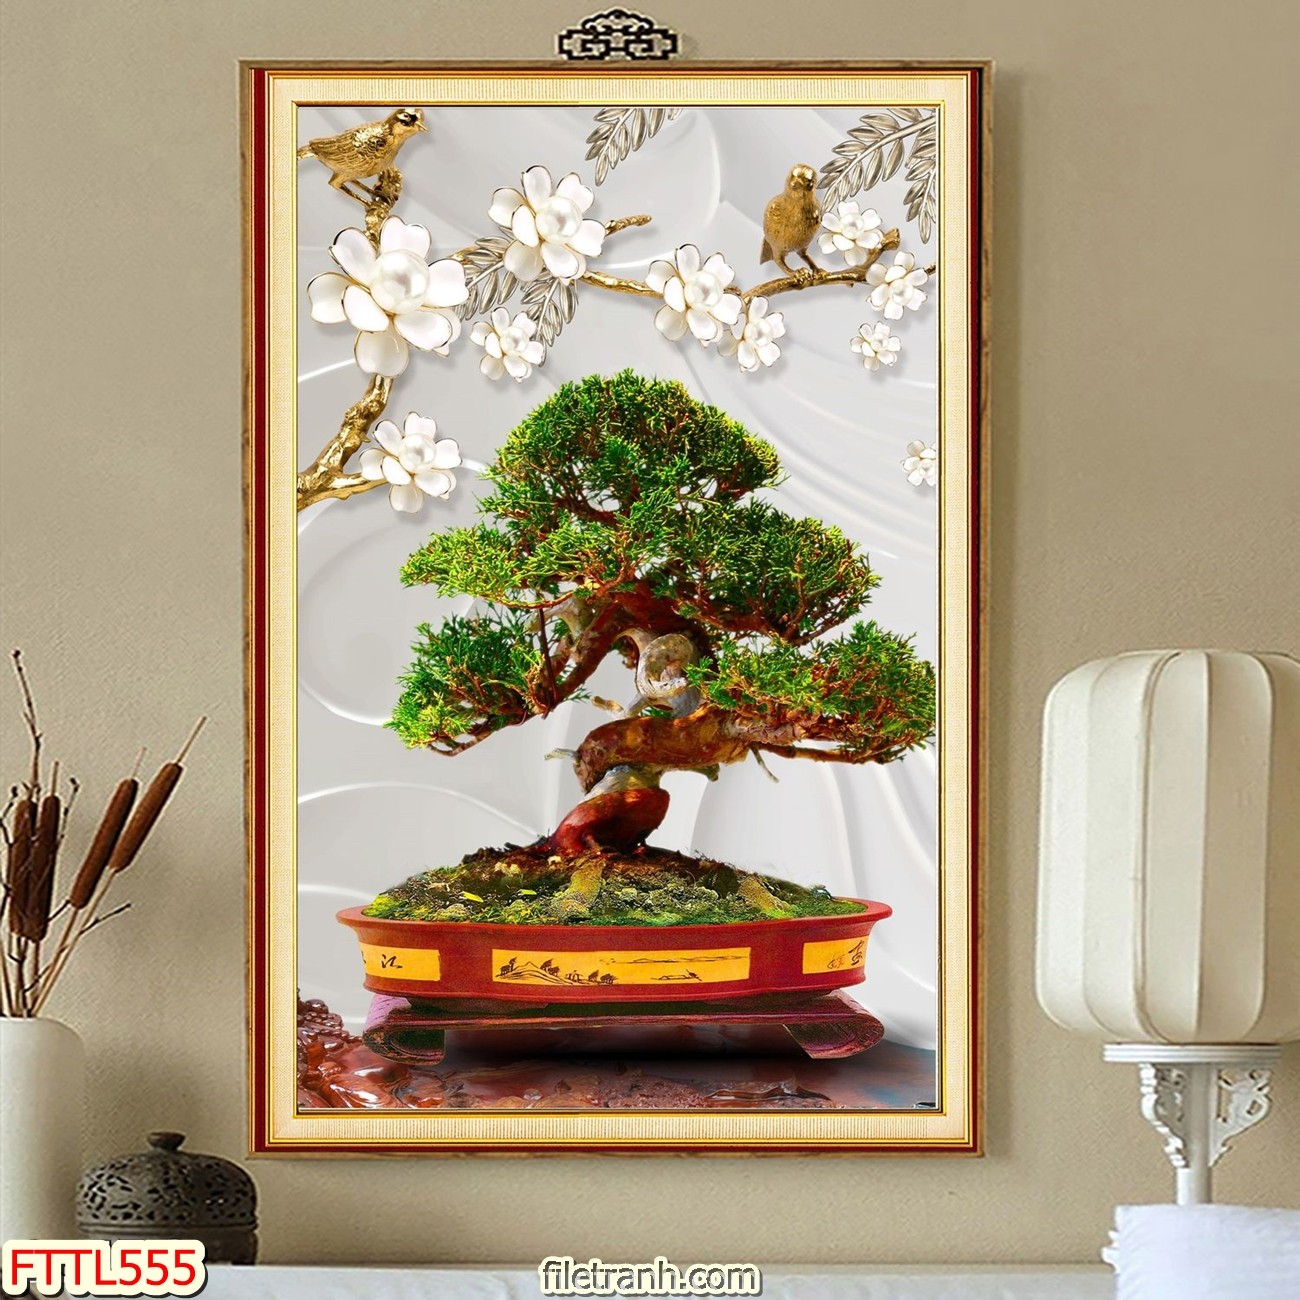 https://filetranh.com/file-tranh-chau-mai-bonsai/file-tranh-chau-mai-bonsai-fttl555.html